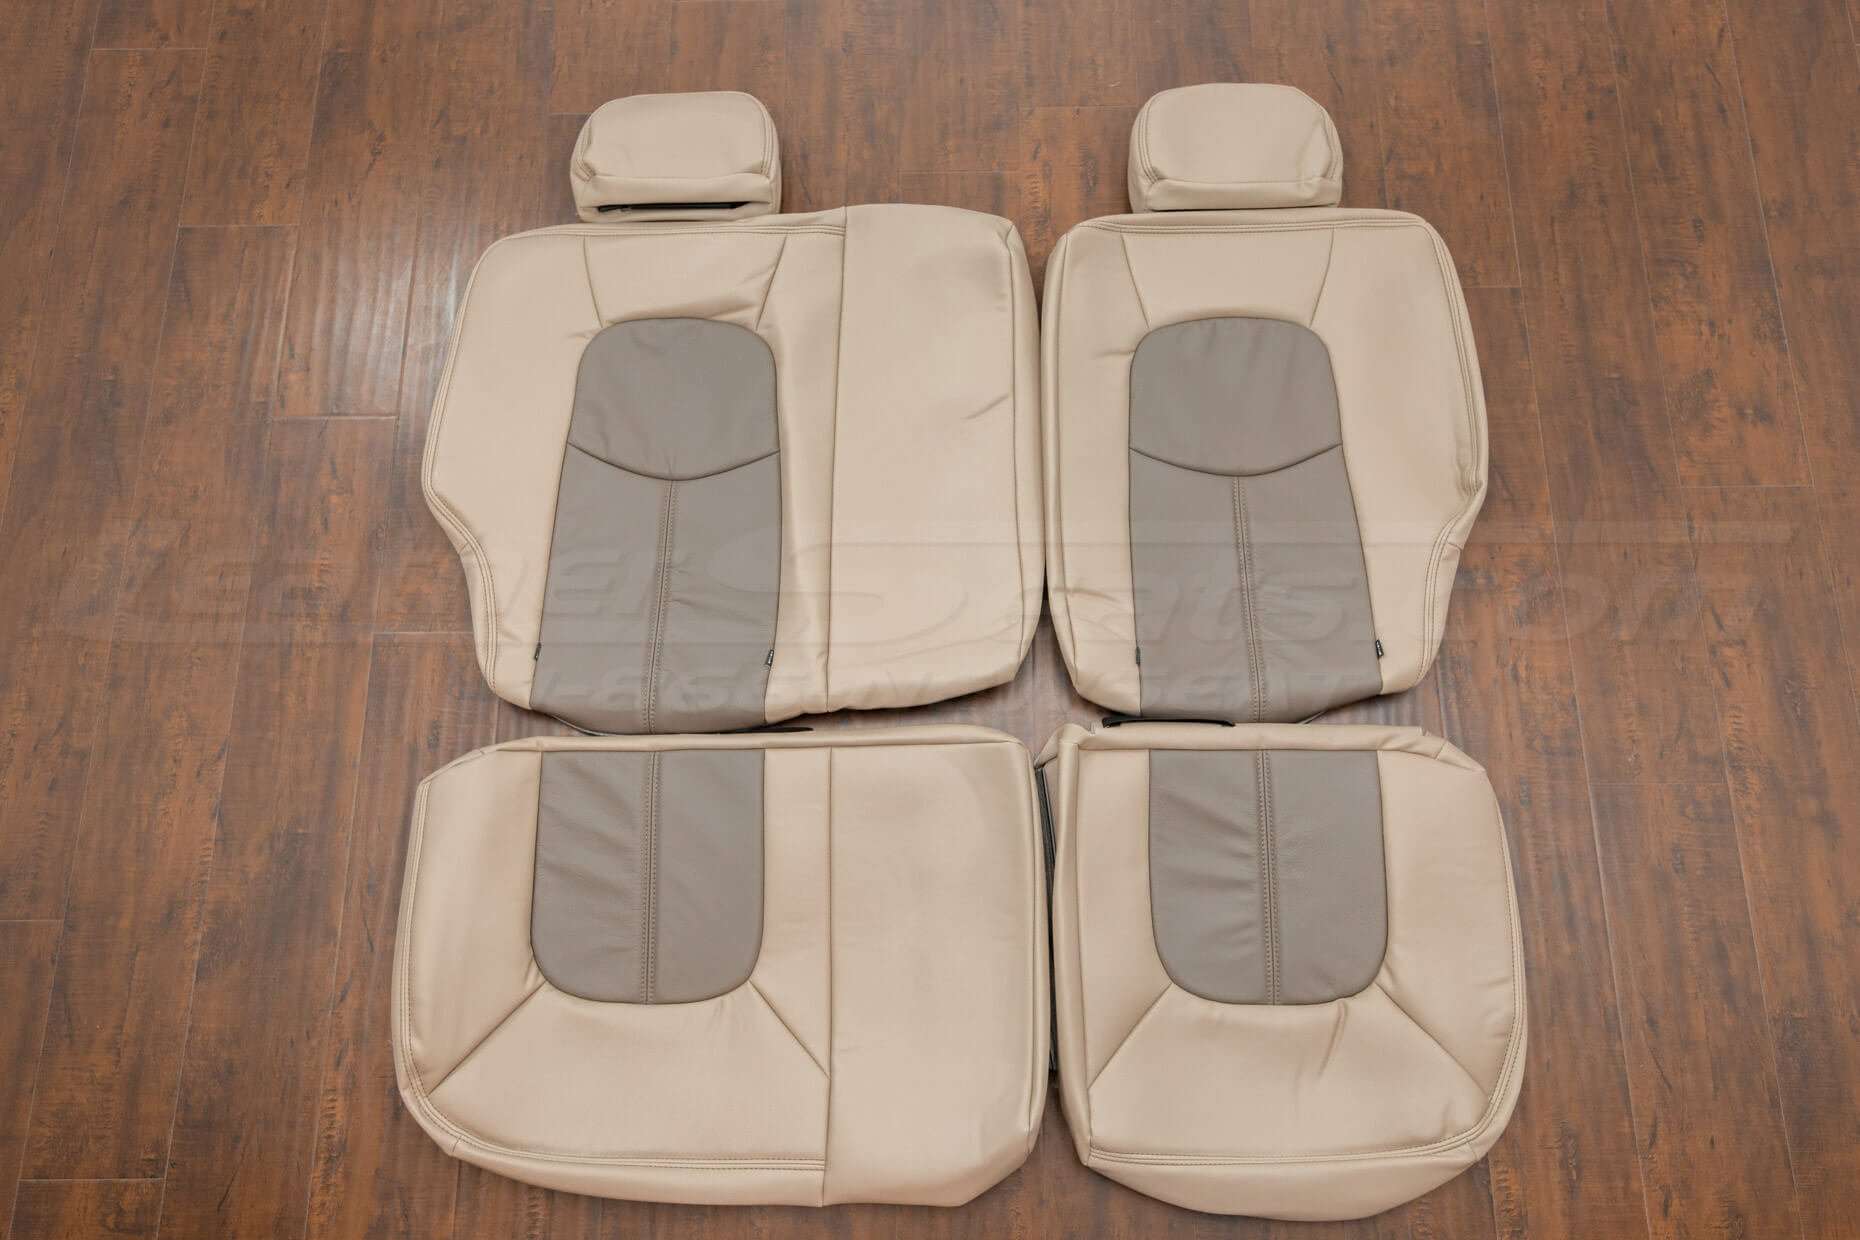 Chevrolet HHR Leather Seat Upholstery Kit - Sandstone & Driftwood - Rear seat upholstery